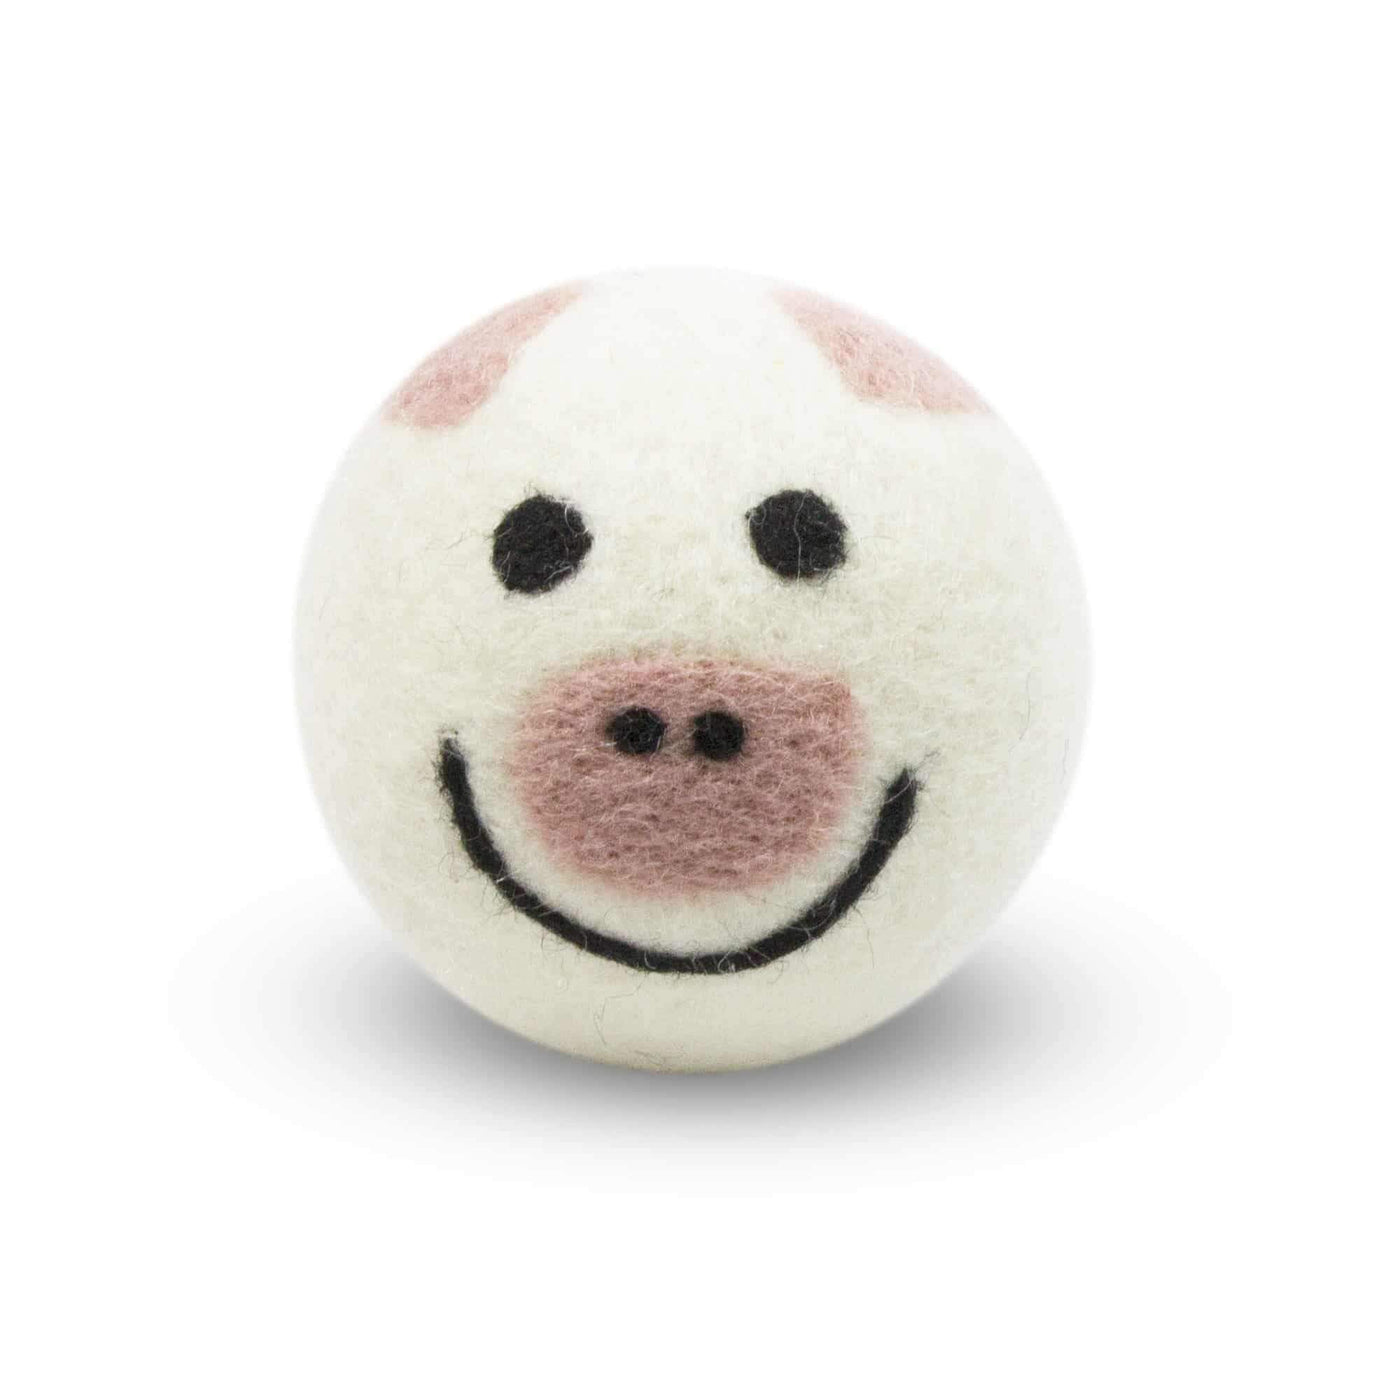 Piggy Band Eco Dryer Balls by Friendsheep